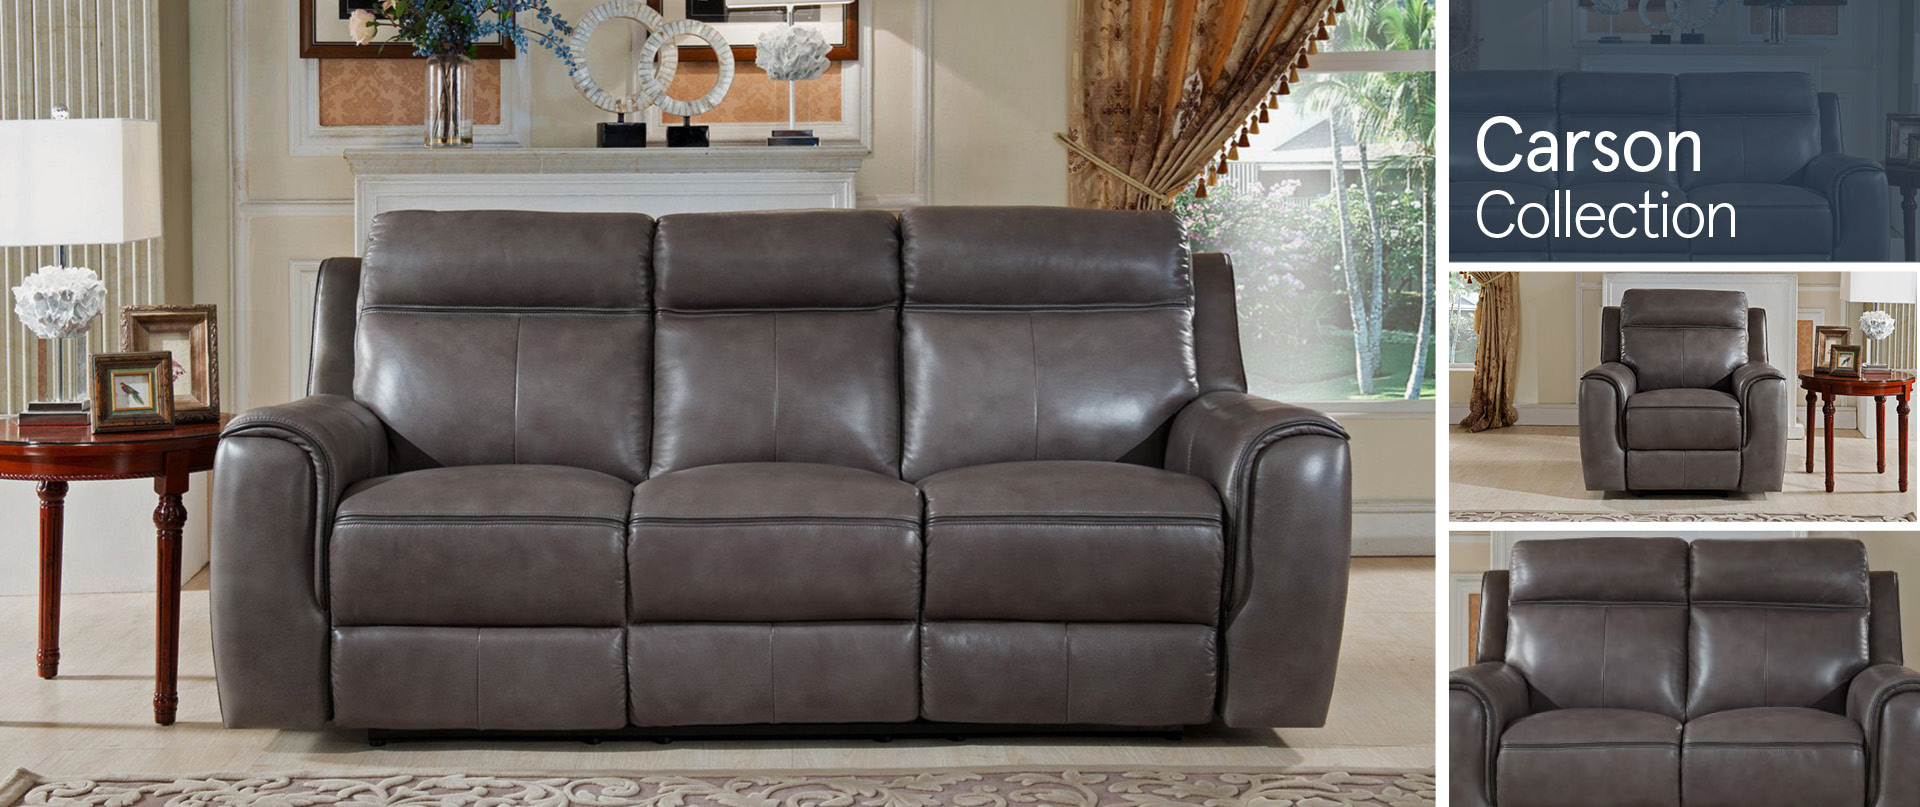 Carson Leather Sofa Ranges